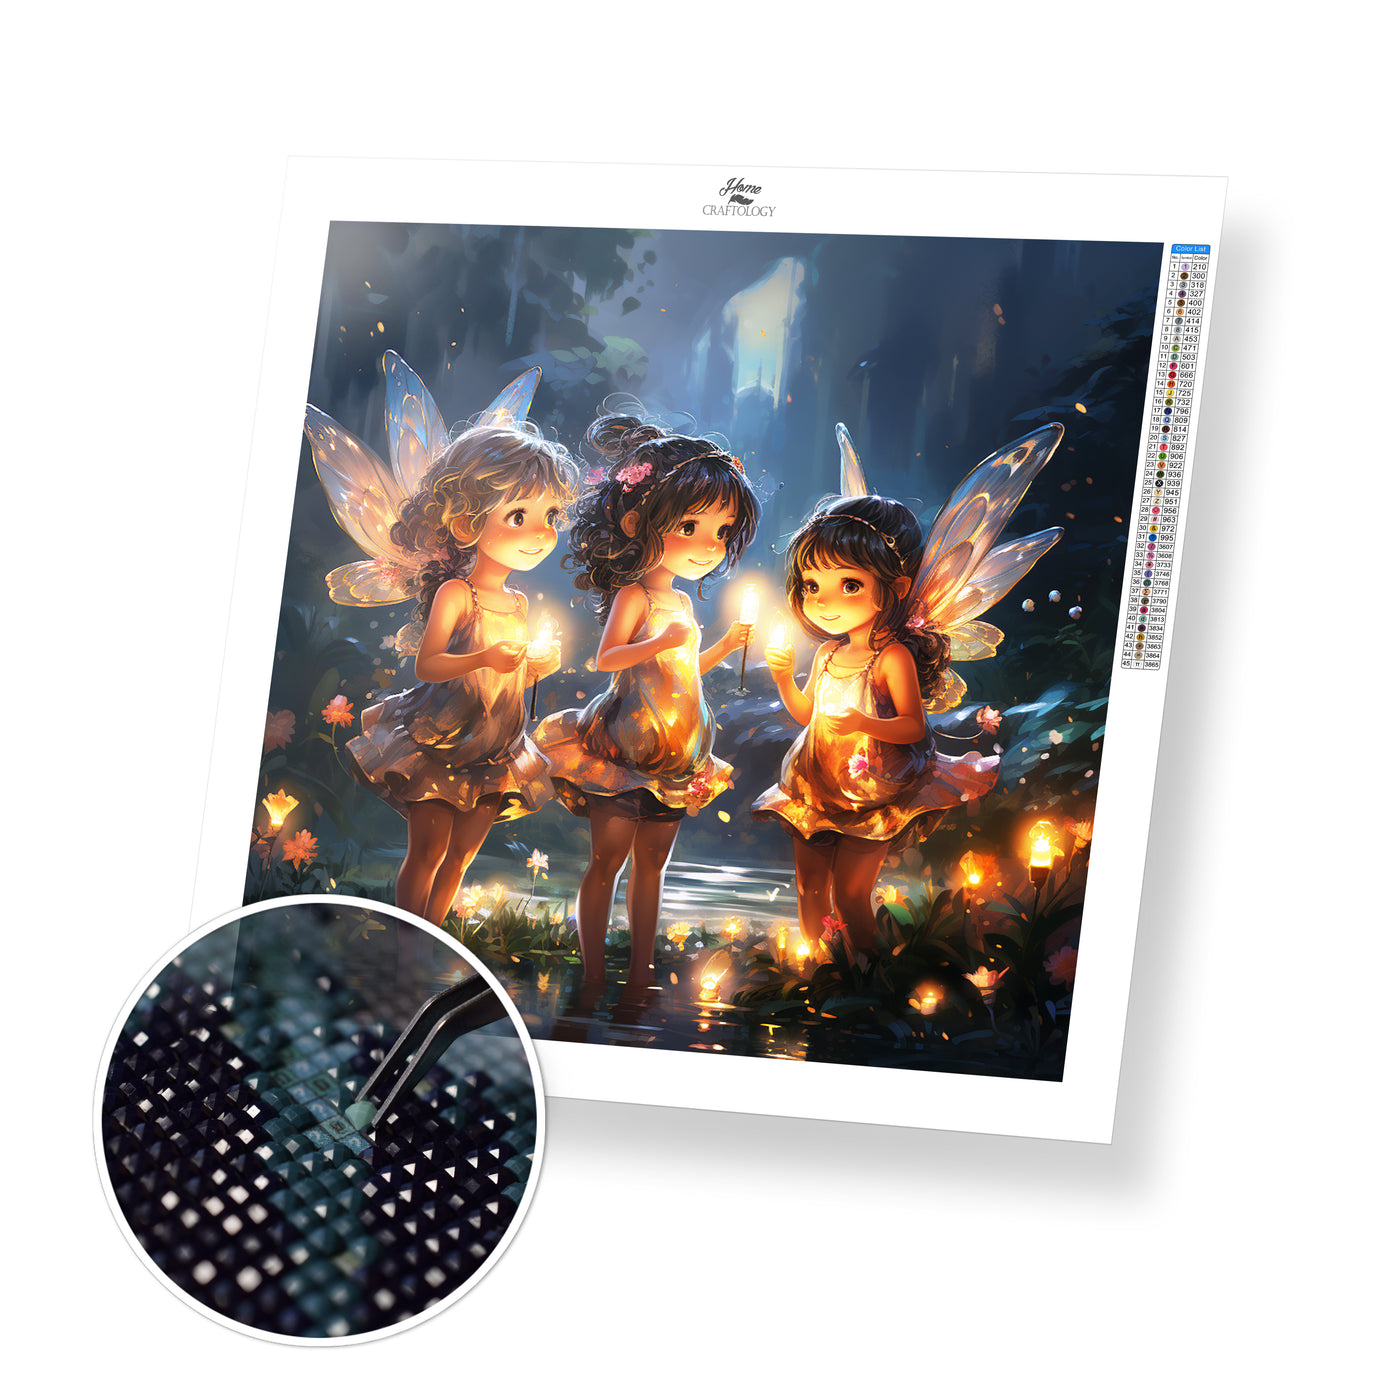 3 Cute Fairies - Premium Diamond Painting Kit